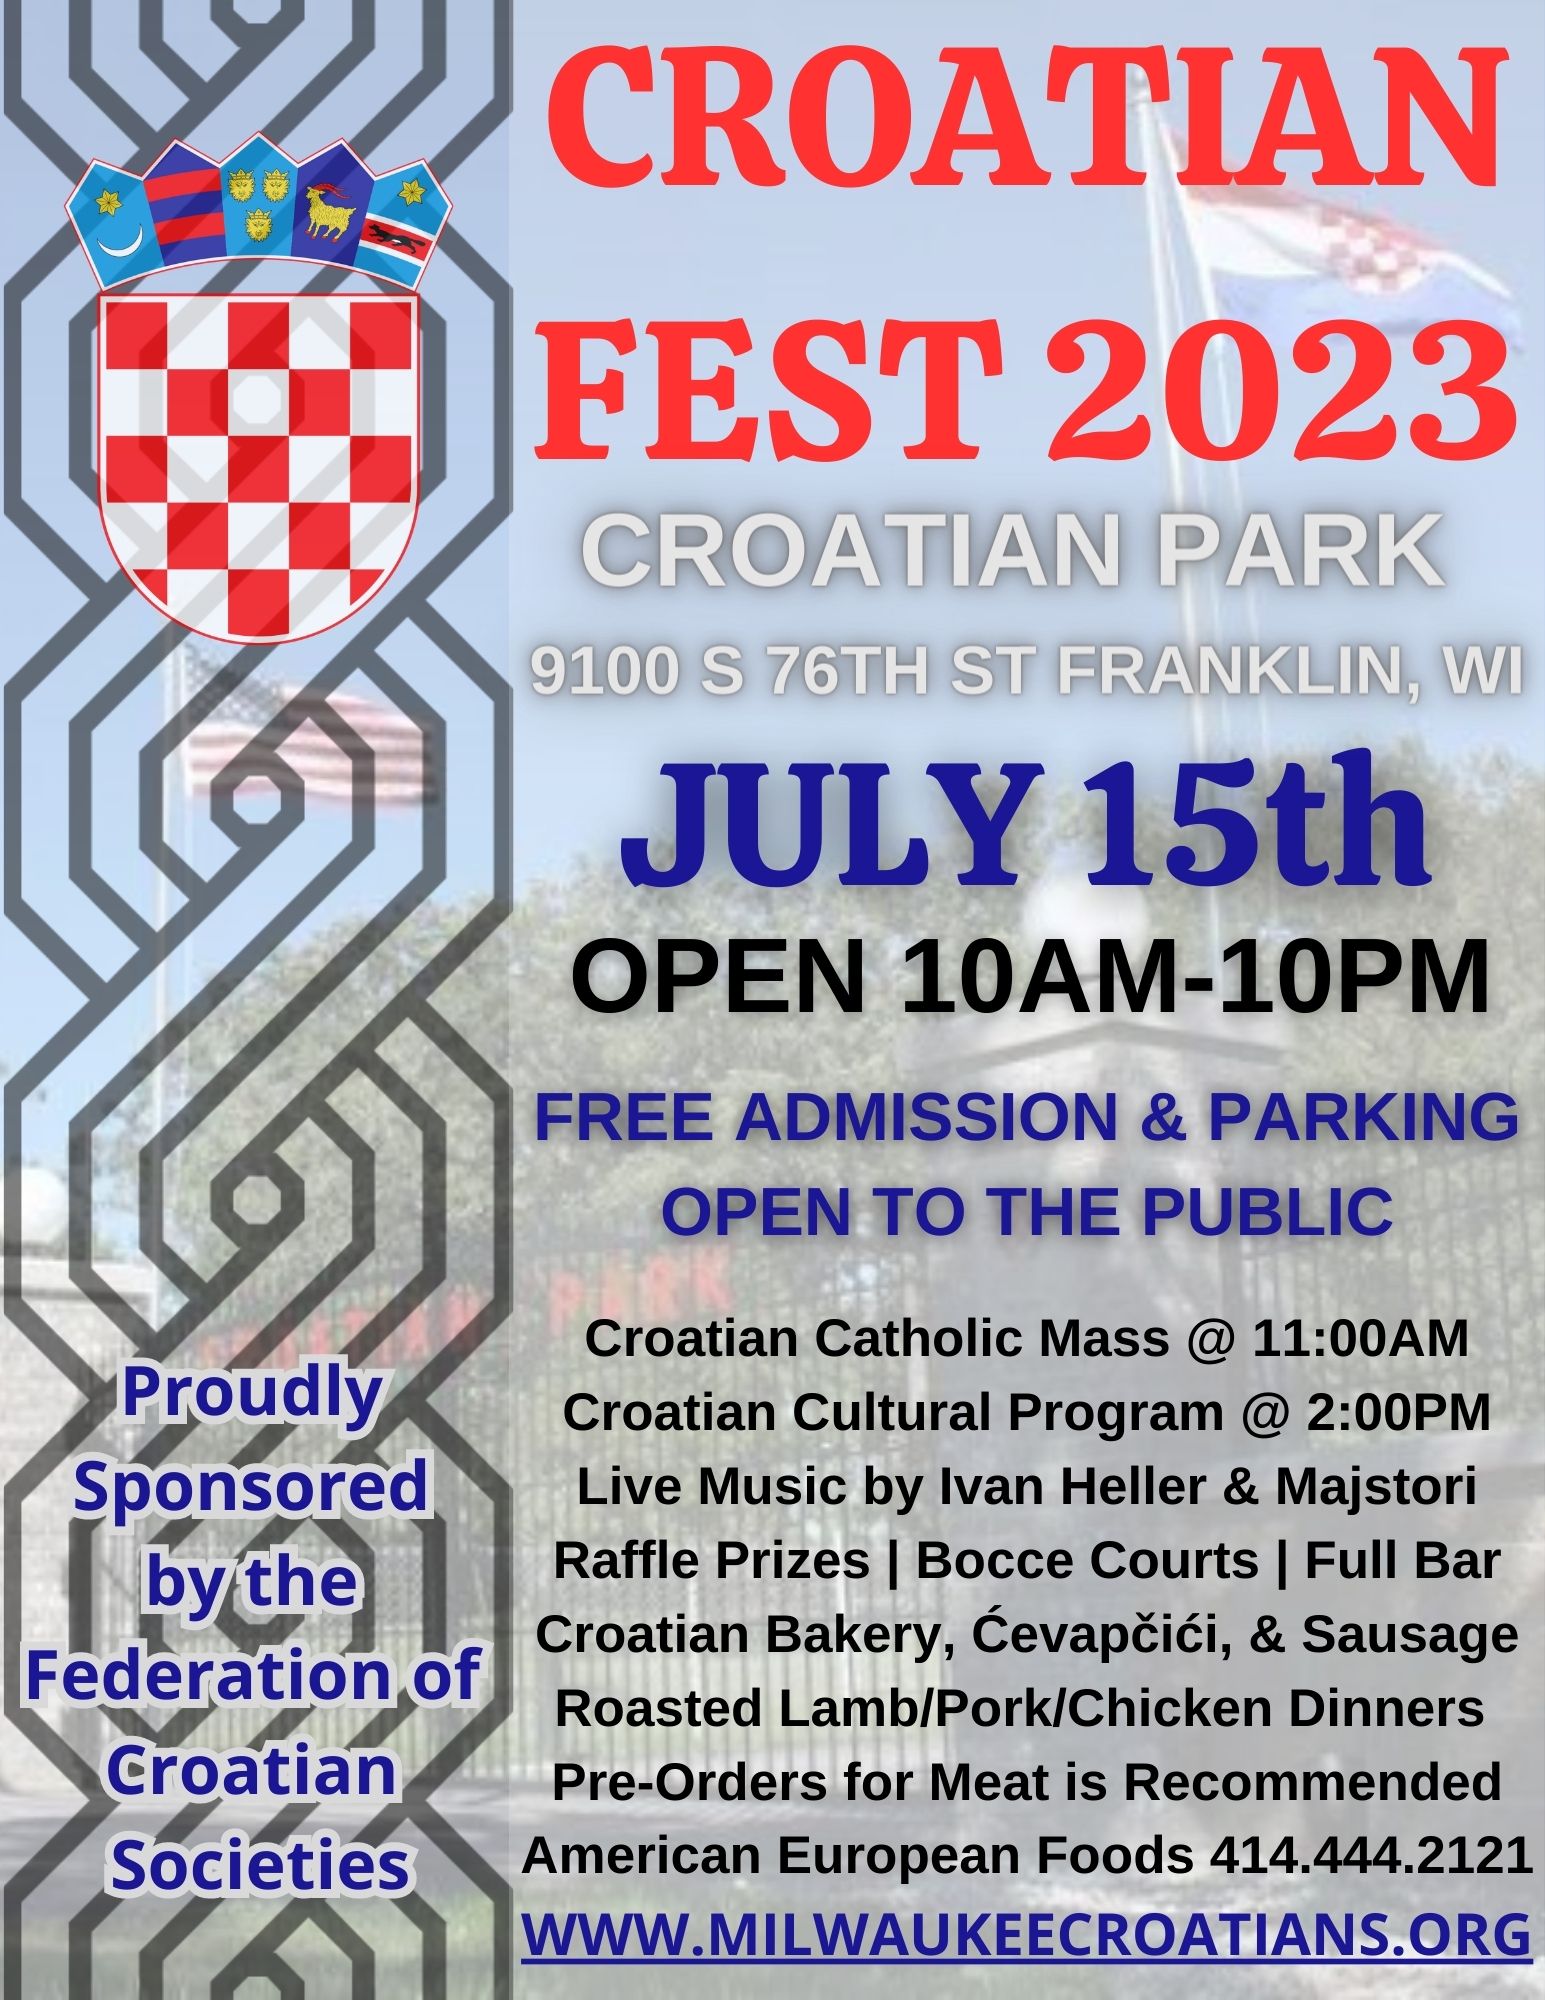 Croatian Fest returns to Milwaukee: A celebration of Croatian culture